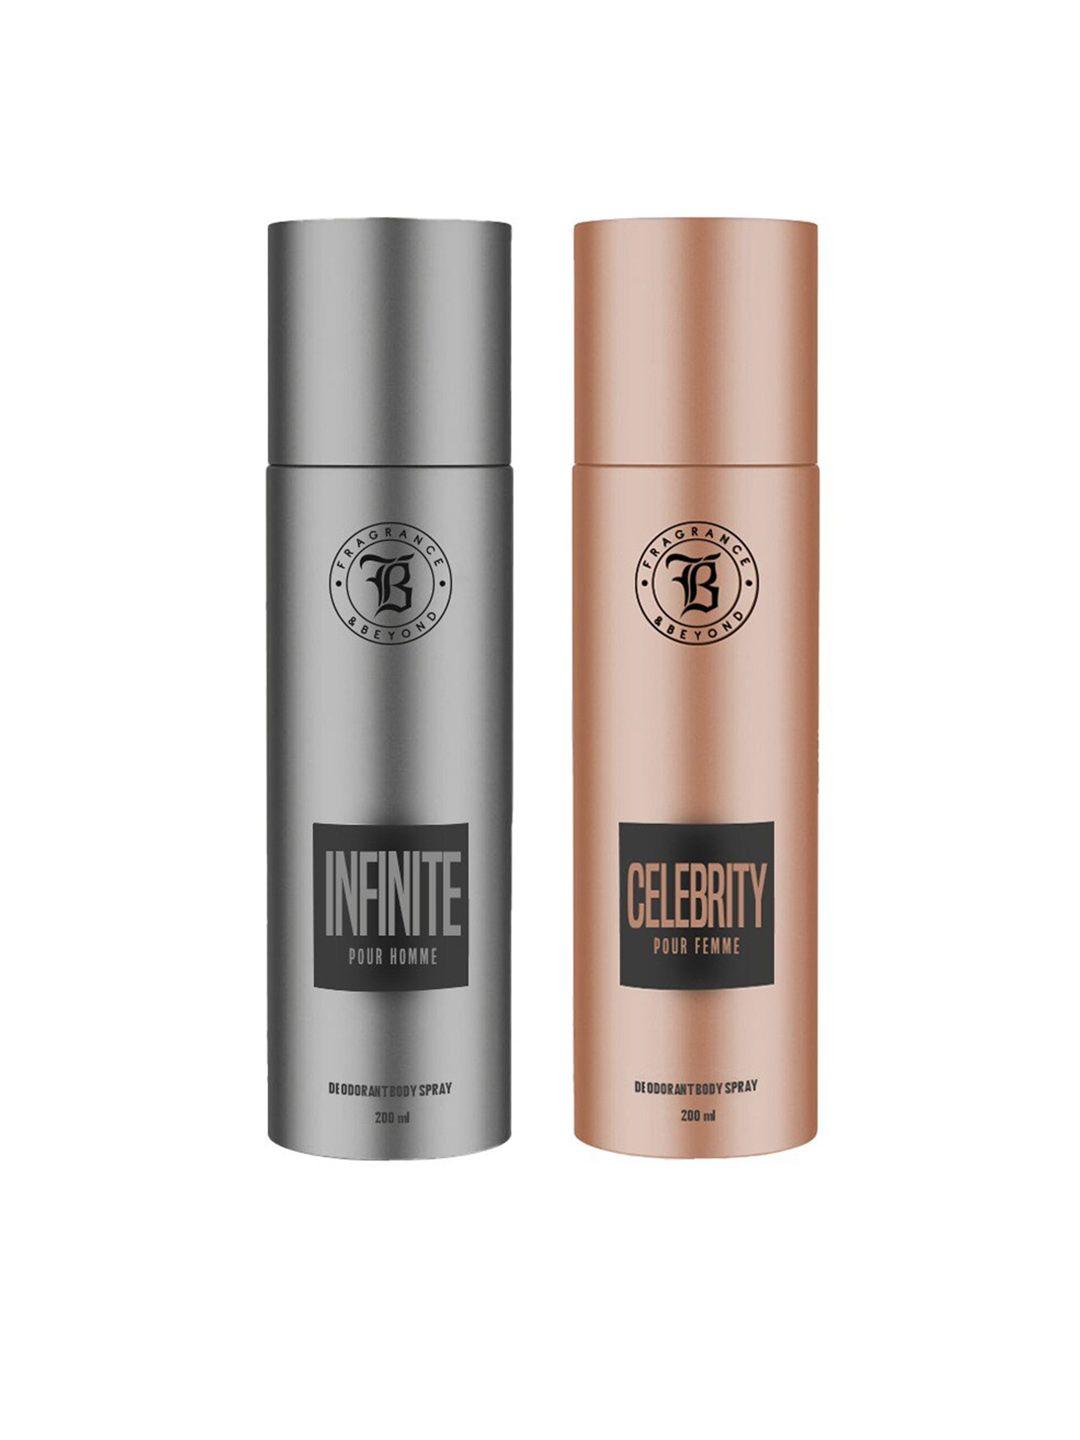 fragrance & beyond set of men infinite & women celebrity deodorant body sprays-200 ml each